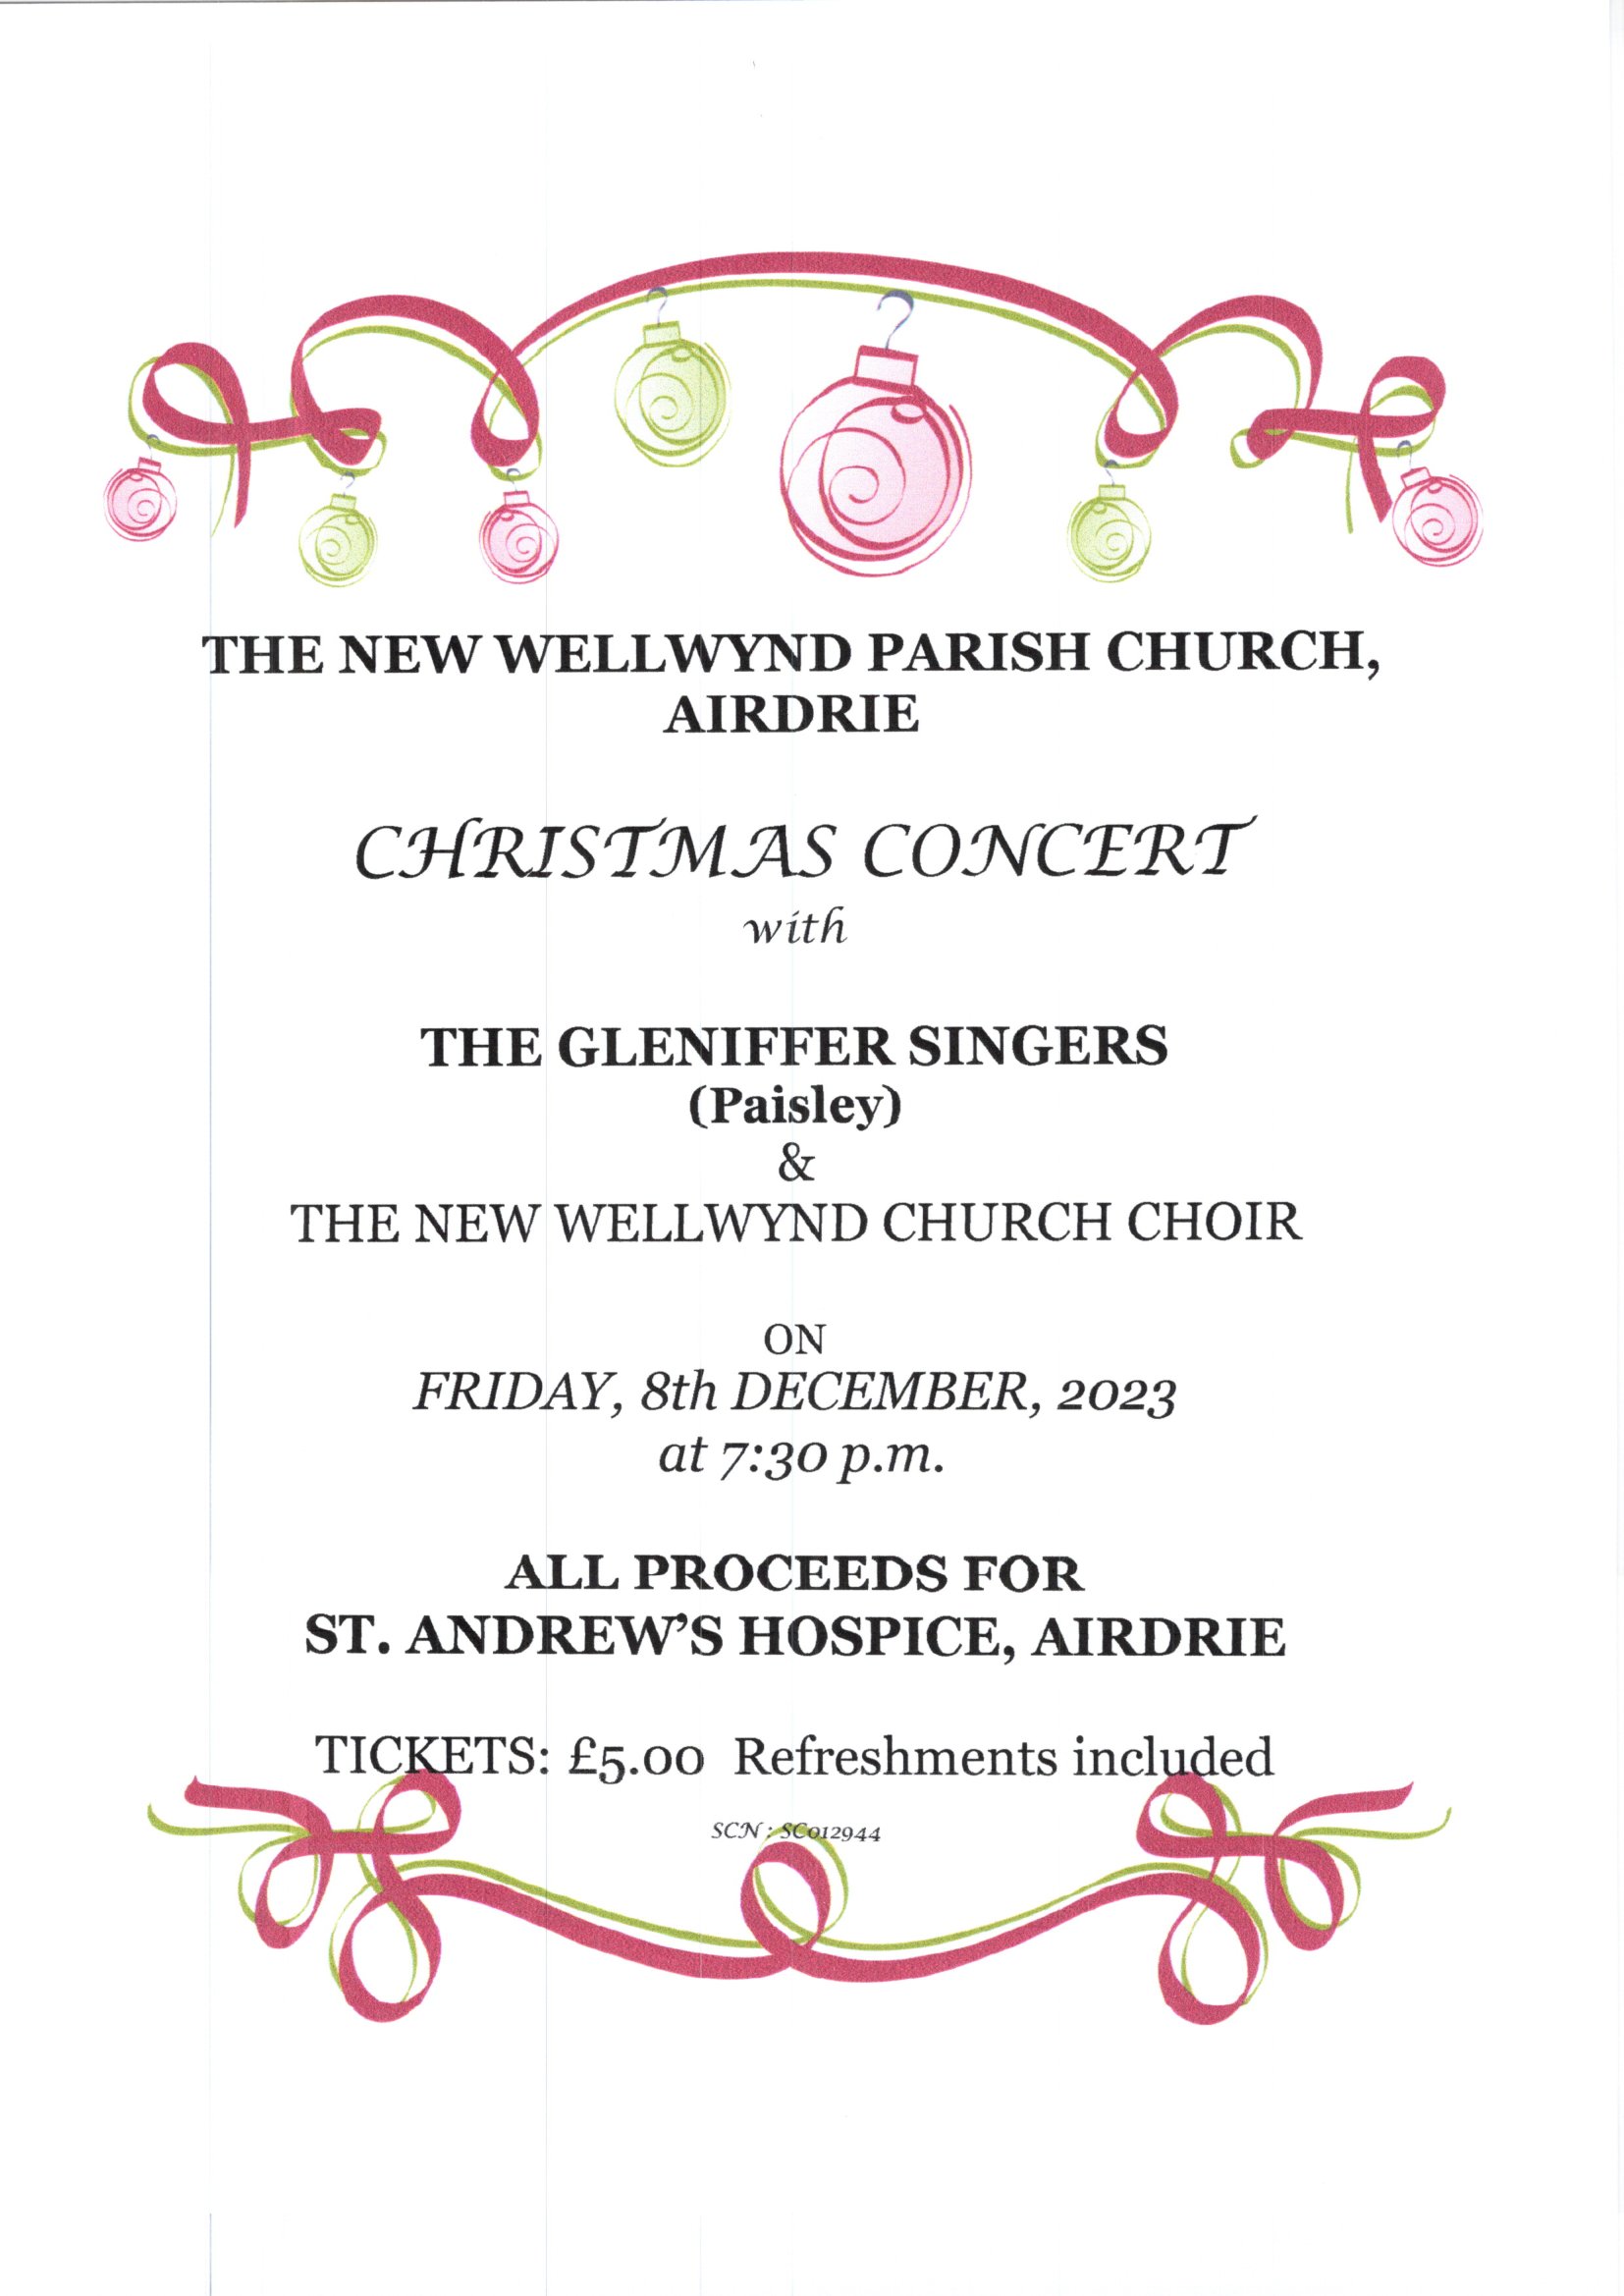 Christmas Concert Poster - NWPC & The Glennifer Singers - Friday 8th December 2023